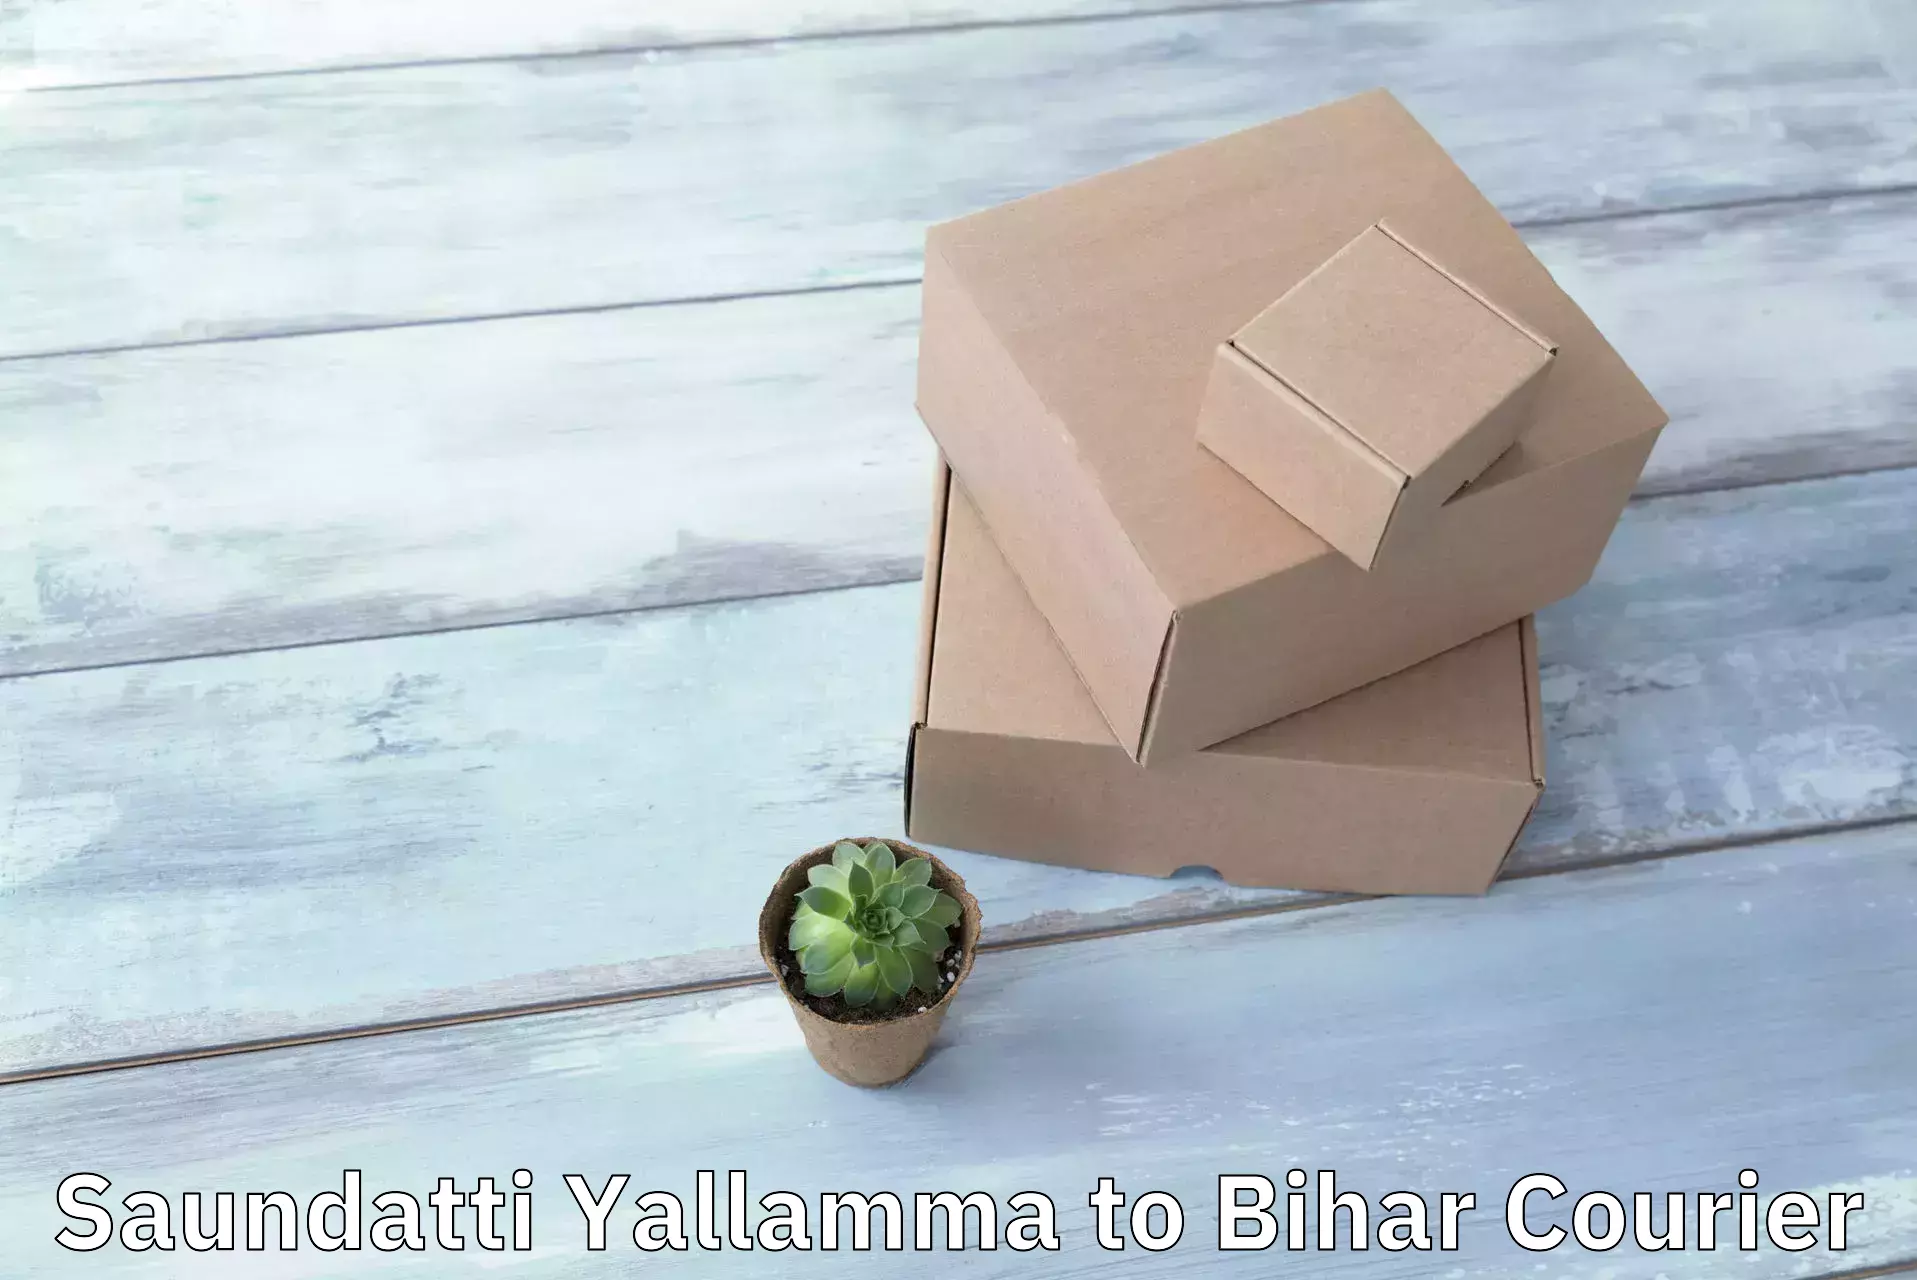 Courier app Saundatti Yallamma to Bettiah